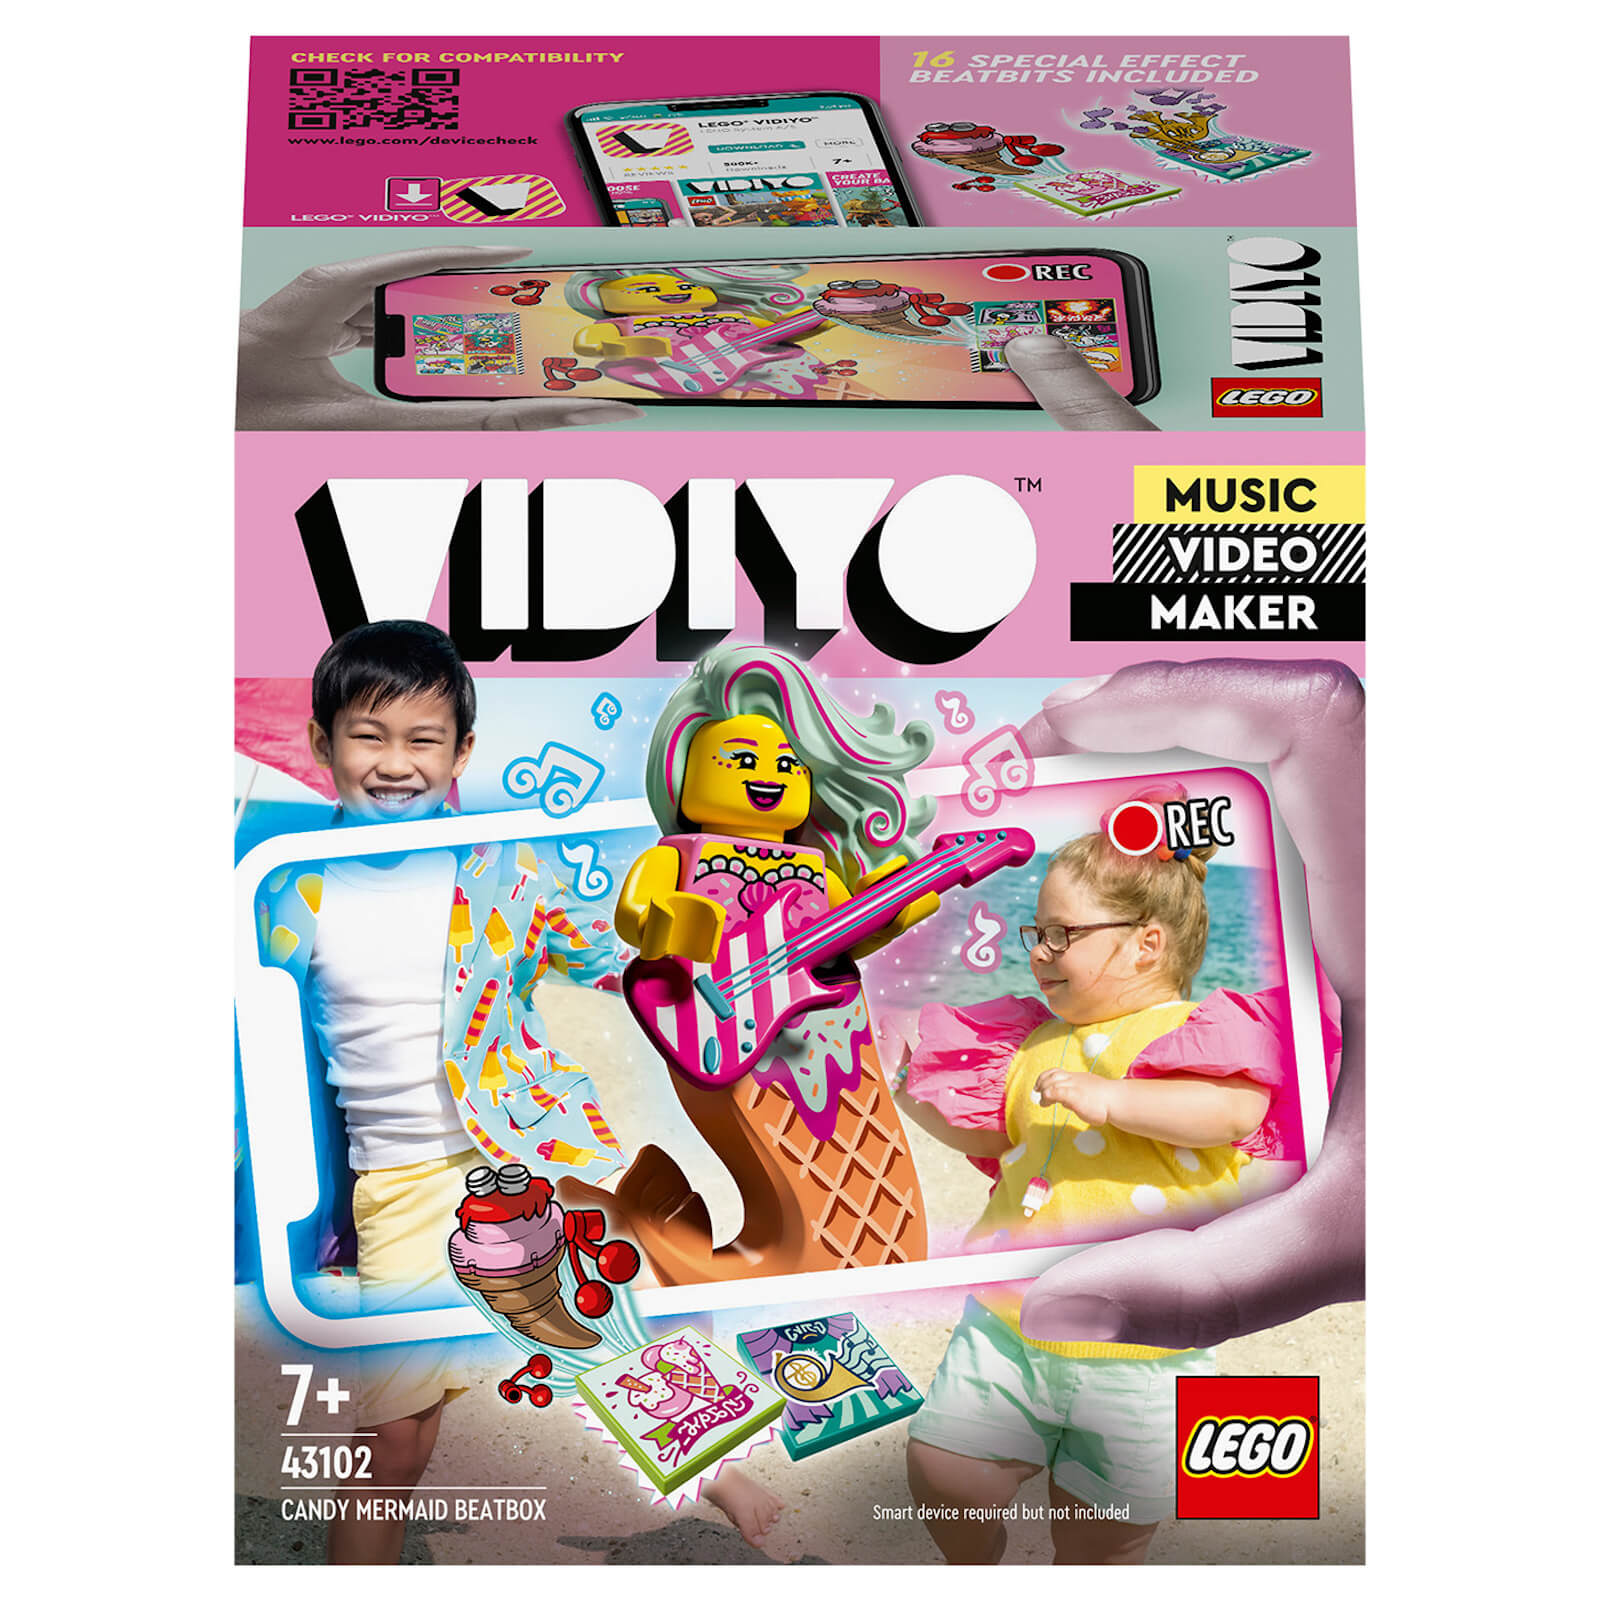 LEGO VIDIYO Candy Mermaid BeatBox Music Video Maker Toy (43102)